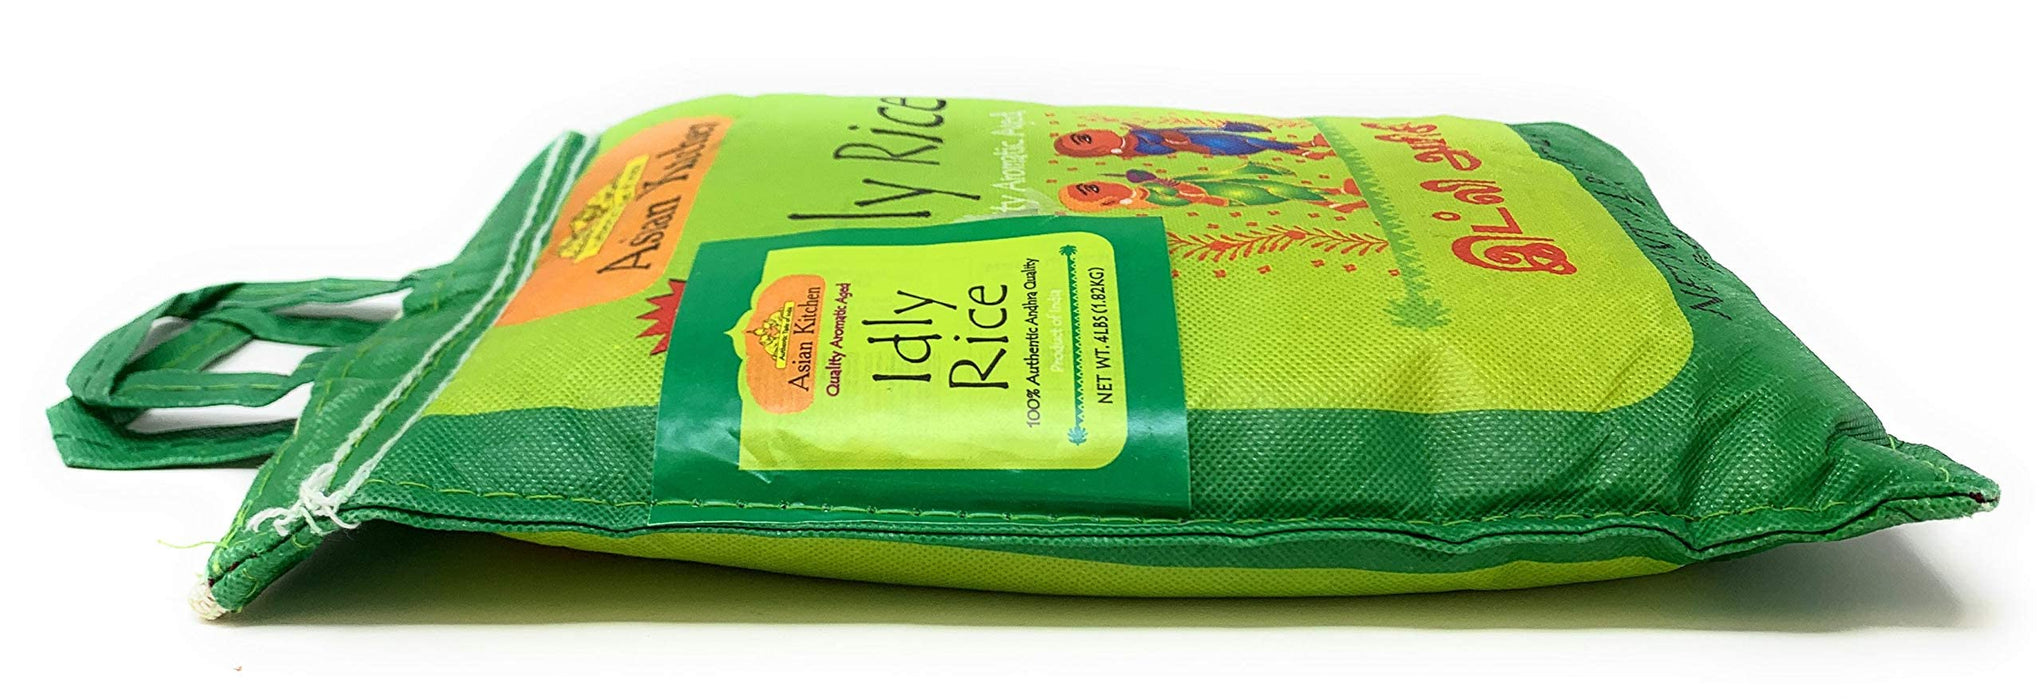 Asian Kitchen Idly (Idli) Rice 20-Pound Bag, 20lbs (9.08kg) Short Grain Rice ~ All Natural | Gluten Friendly | Vegan | Indian Origin | Export Quality